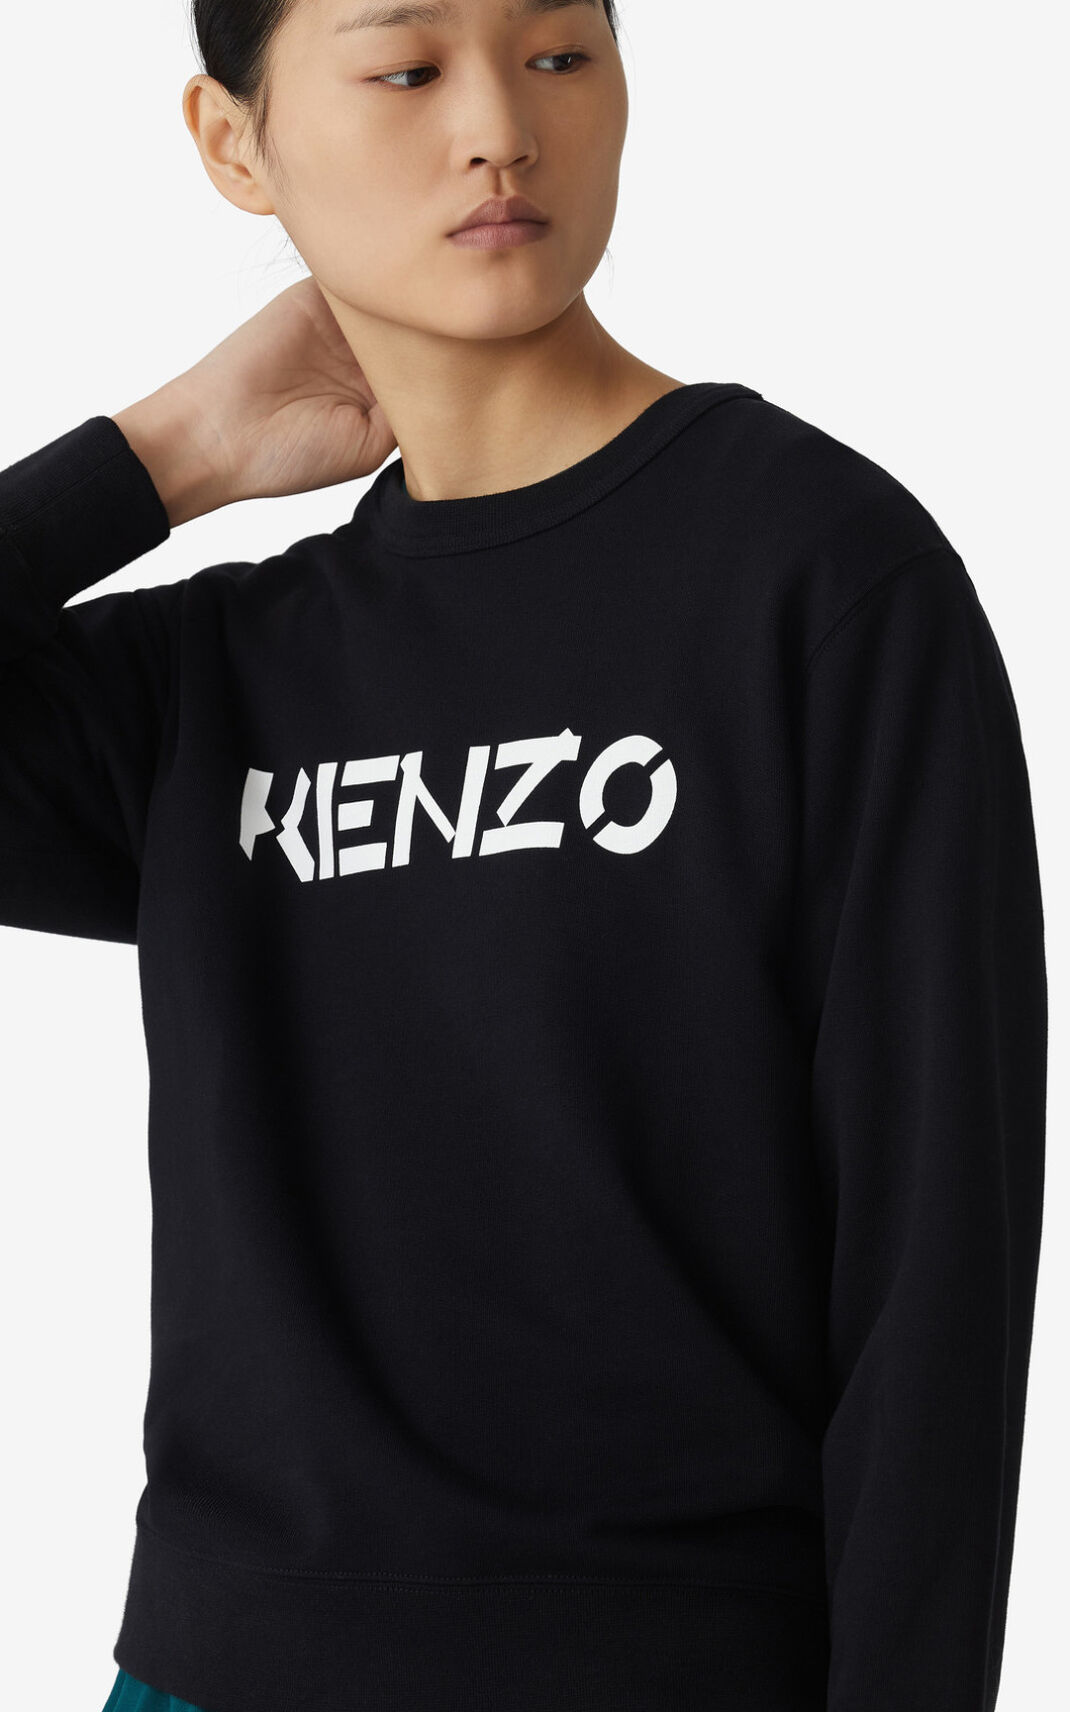 Kenzo Logo Sweatshirt Black For Womens 4579TYEAW